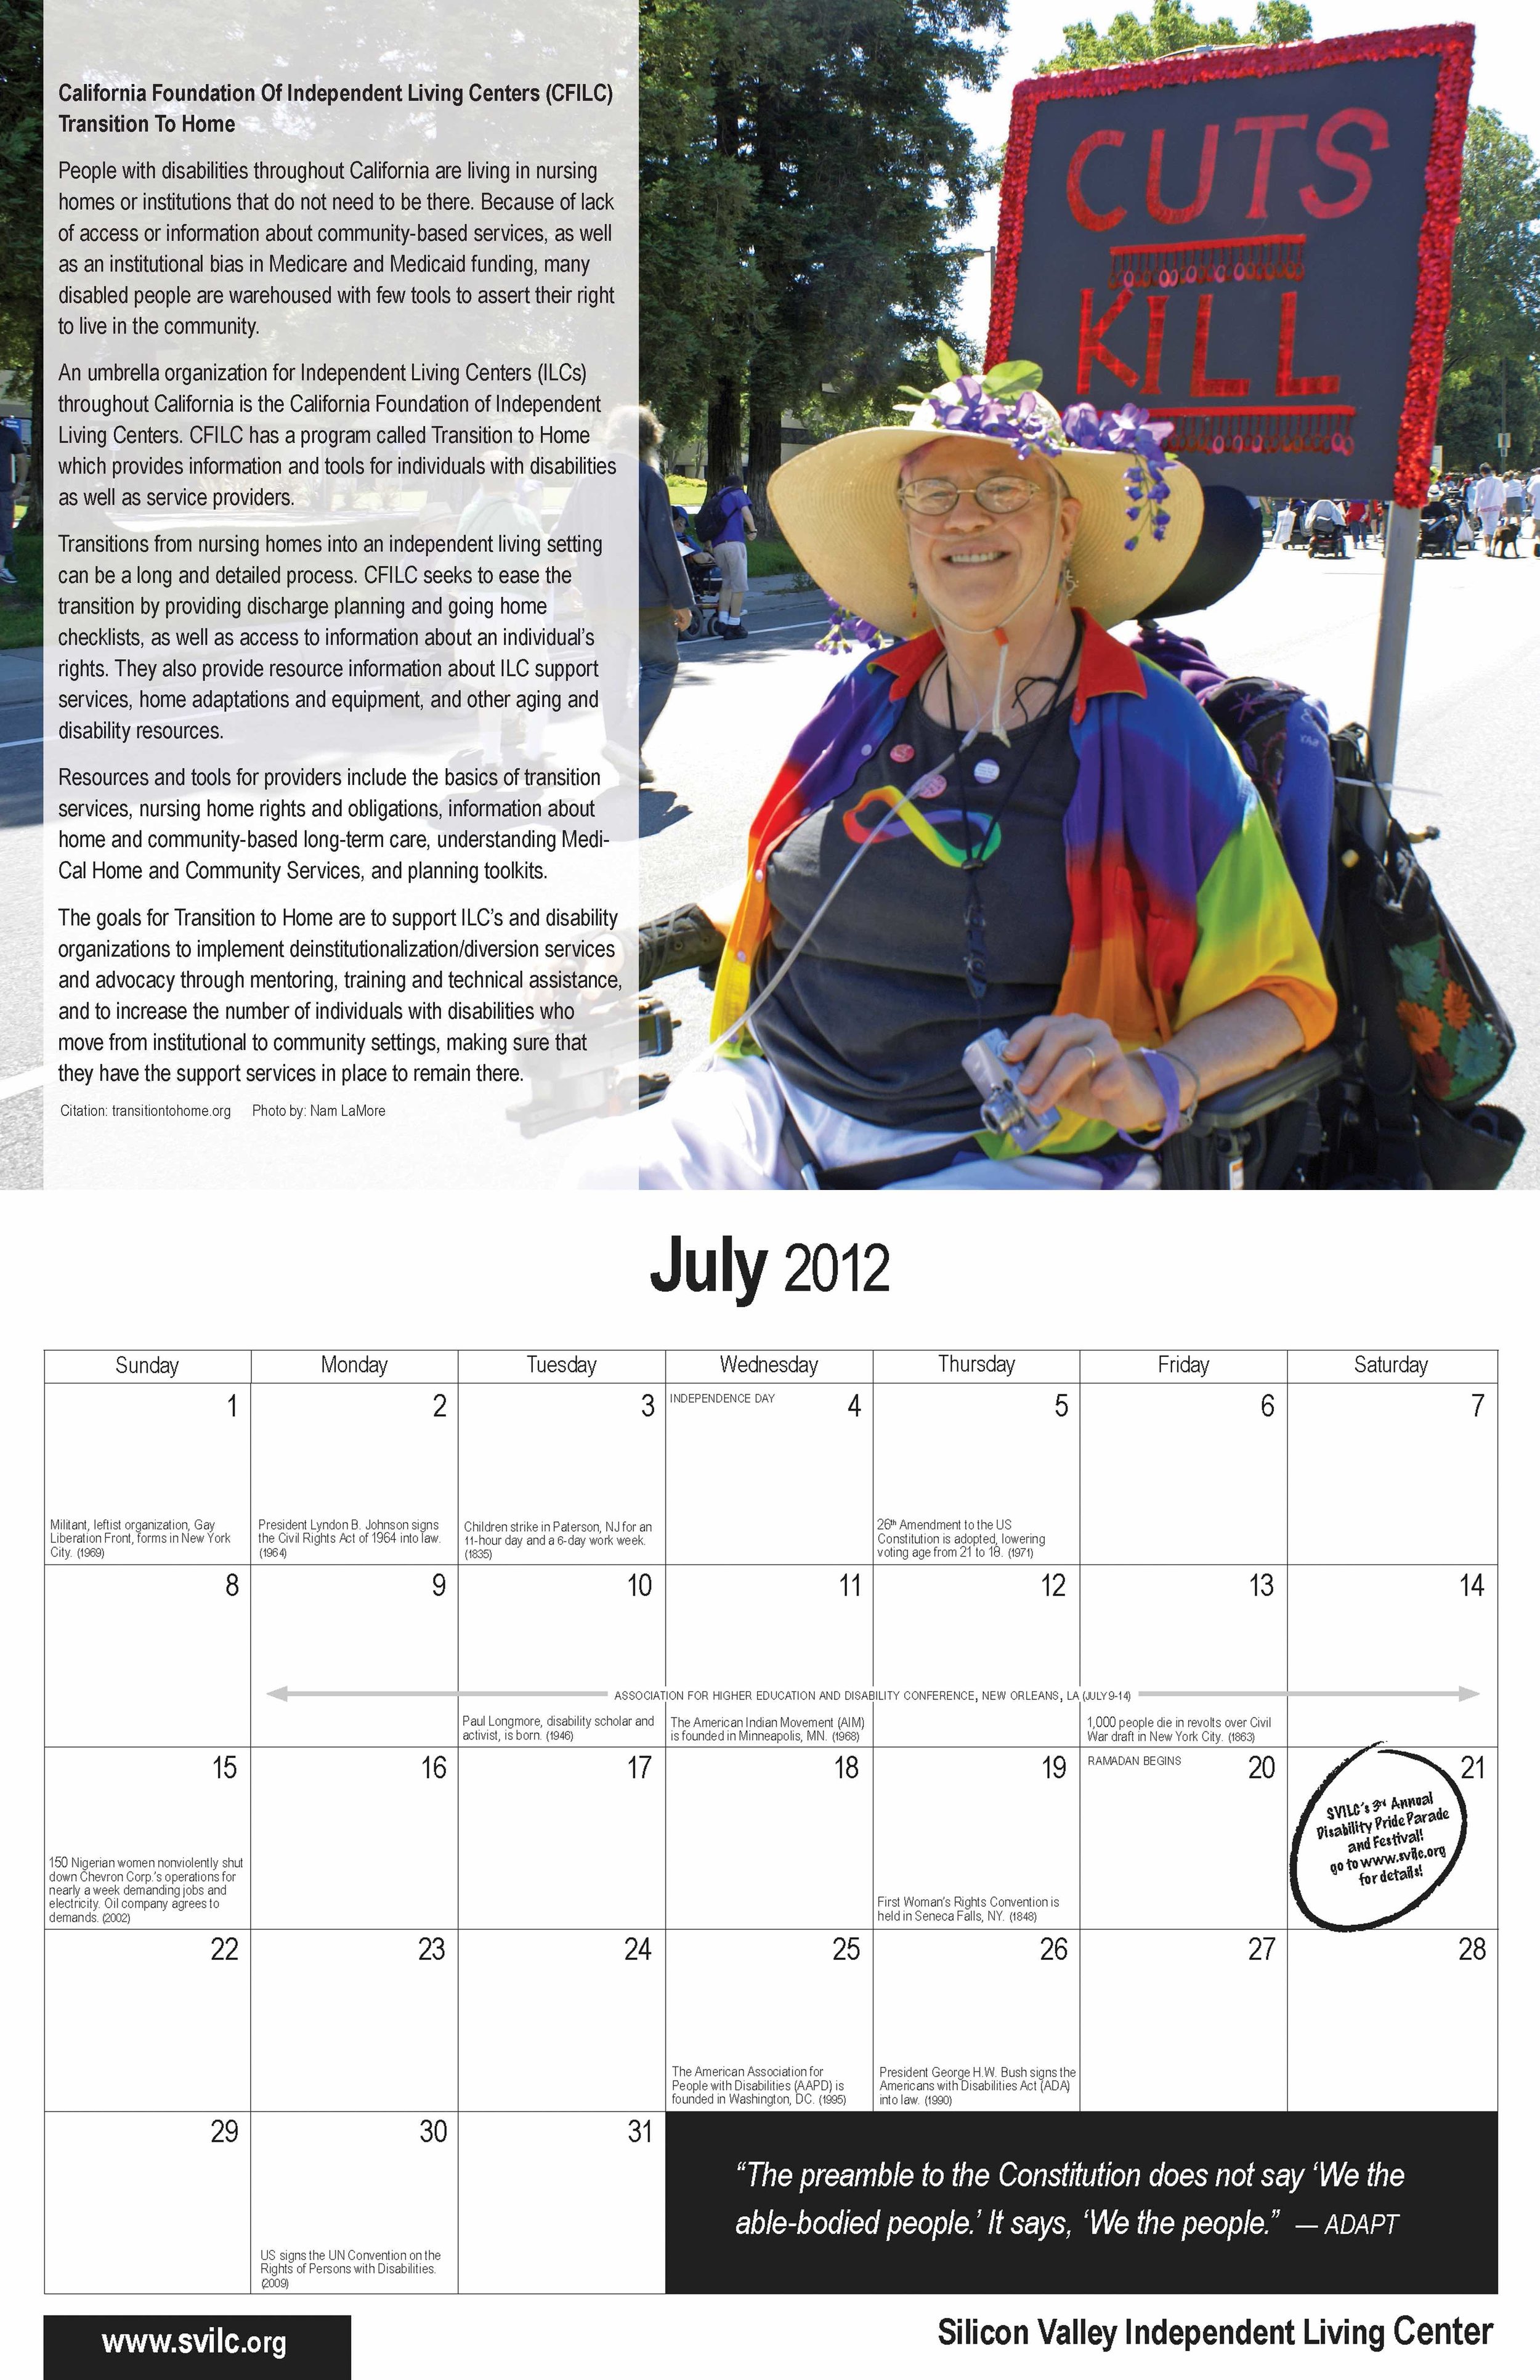   SVILC 2012 Calendar  July spread 